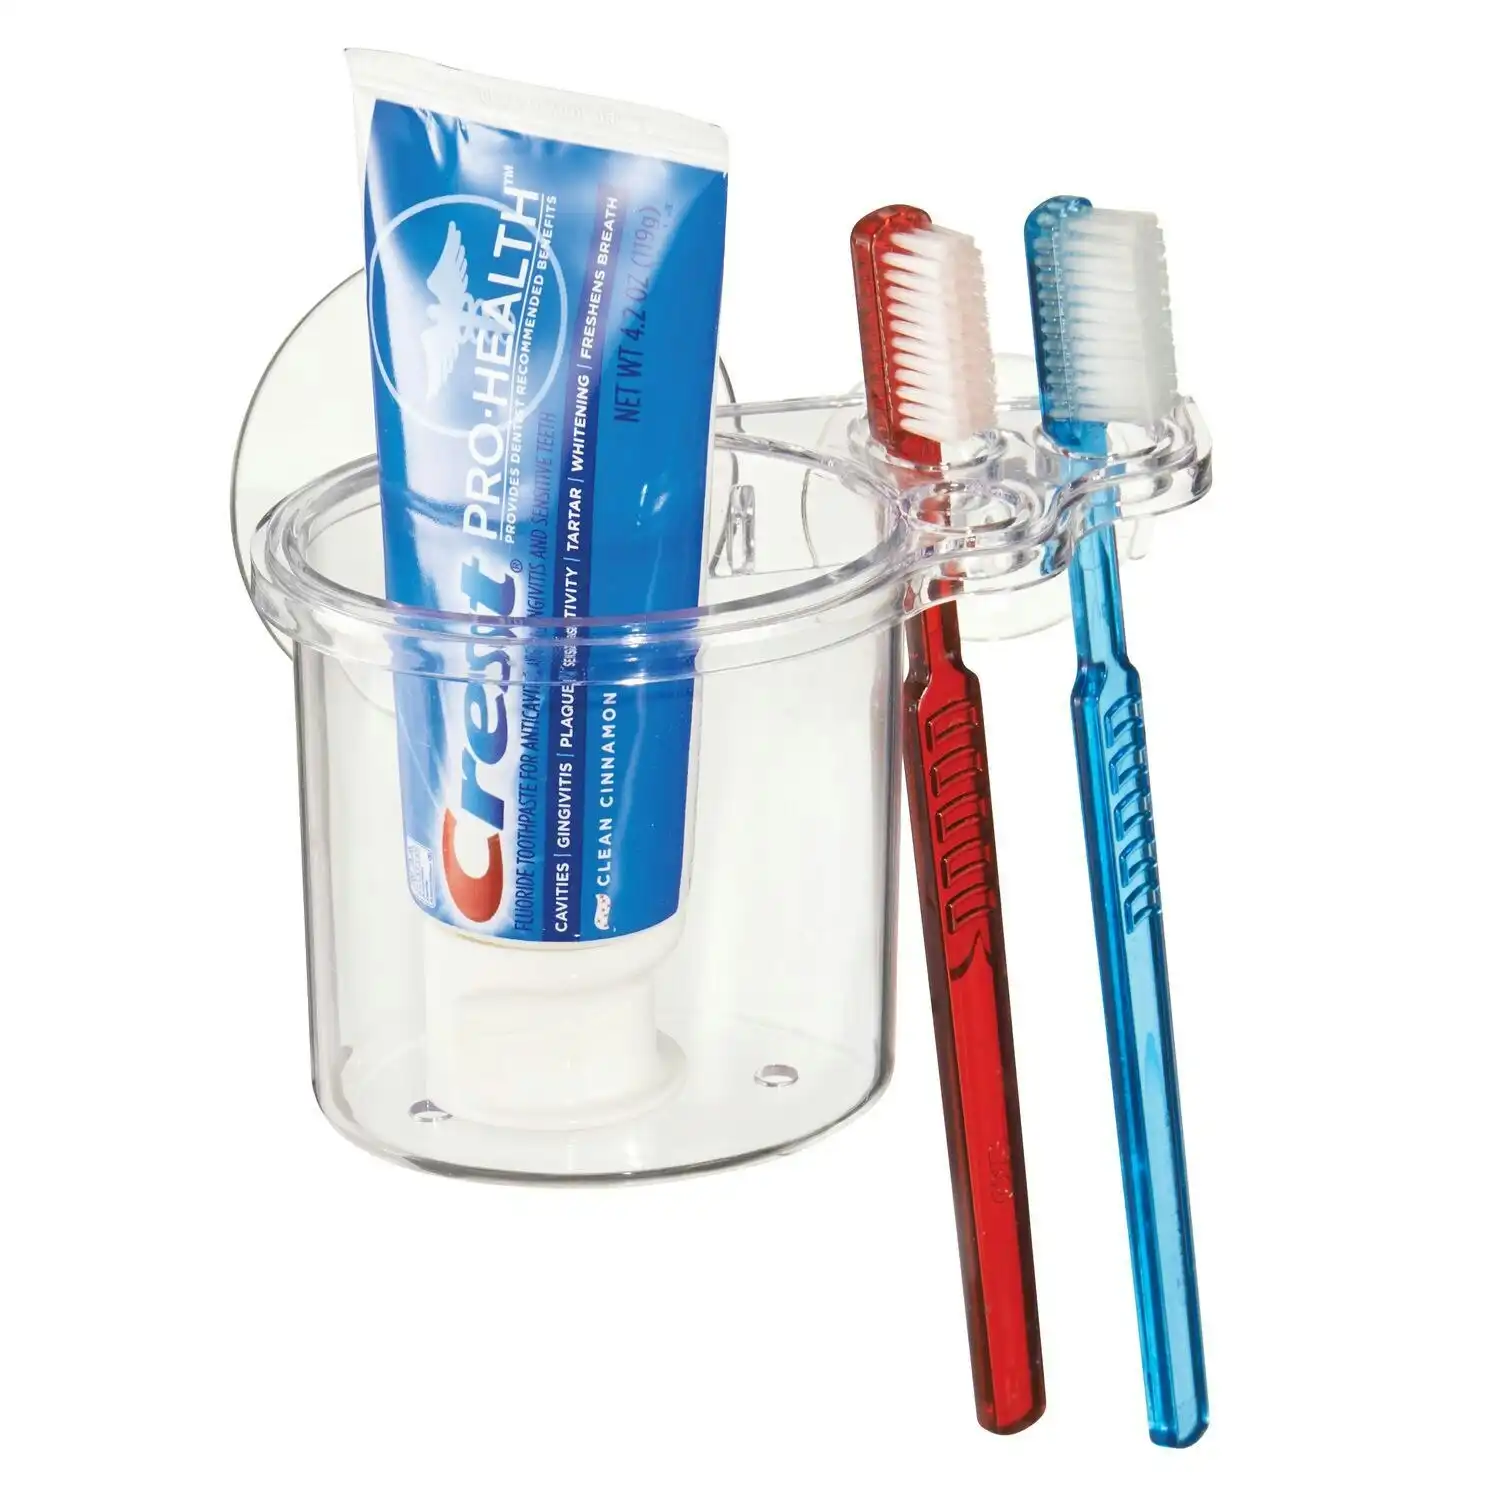 2x Idesign Suction Toothbrush Holder Bathroom Organiser 13x7.5cm Storage Clear